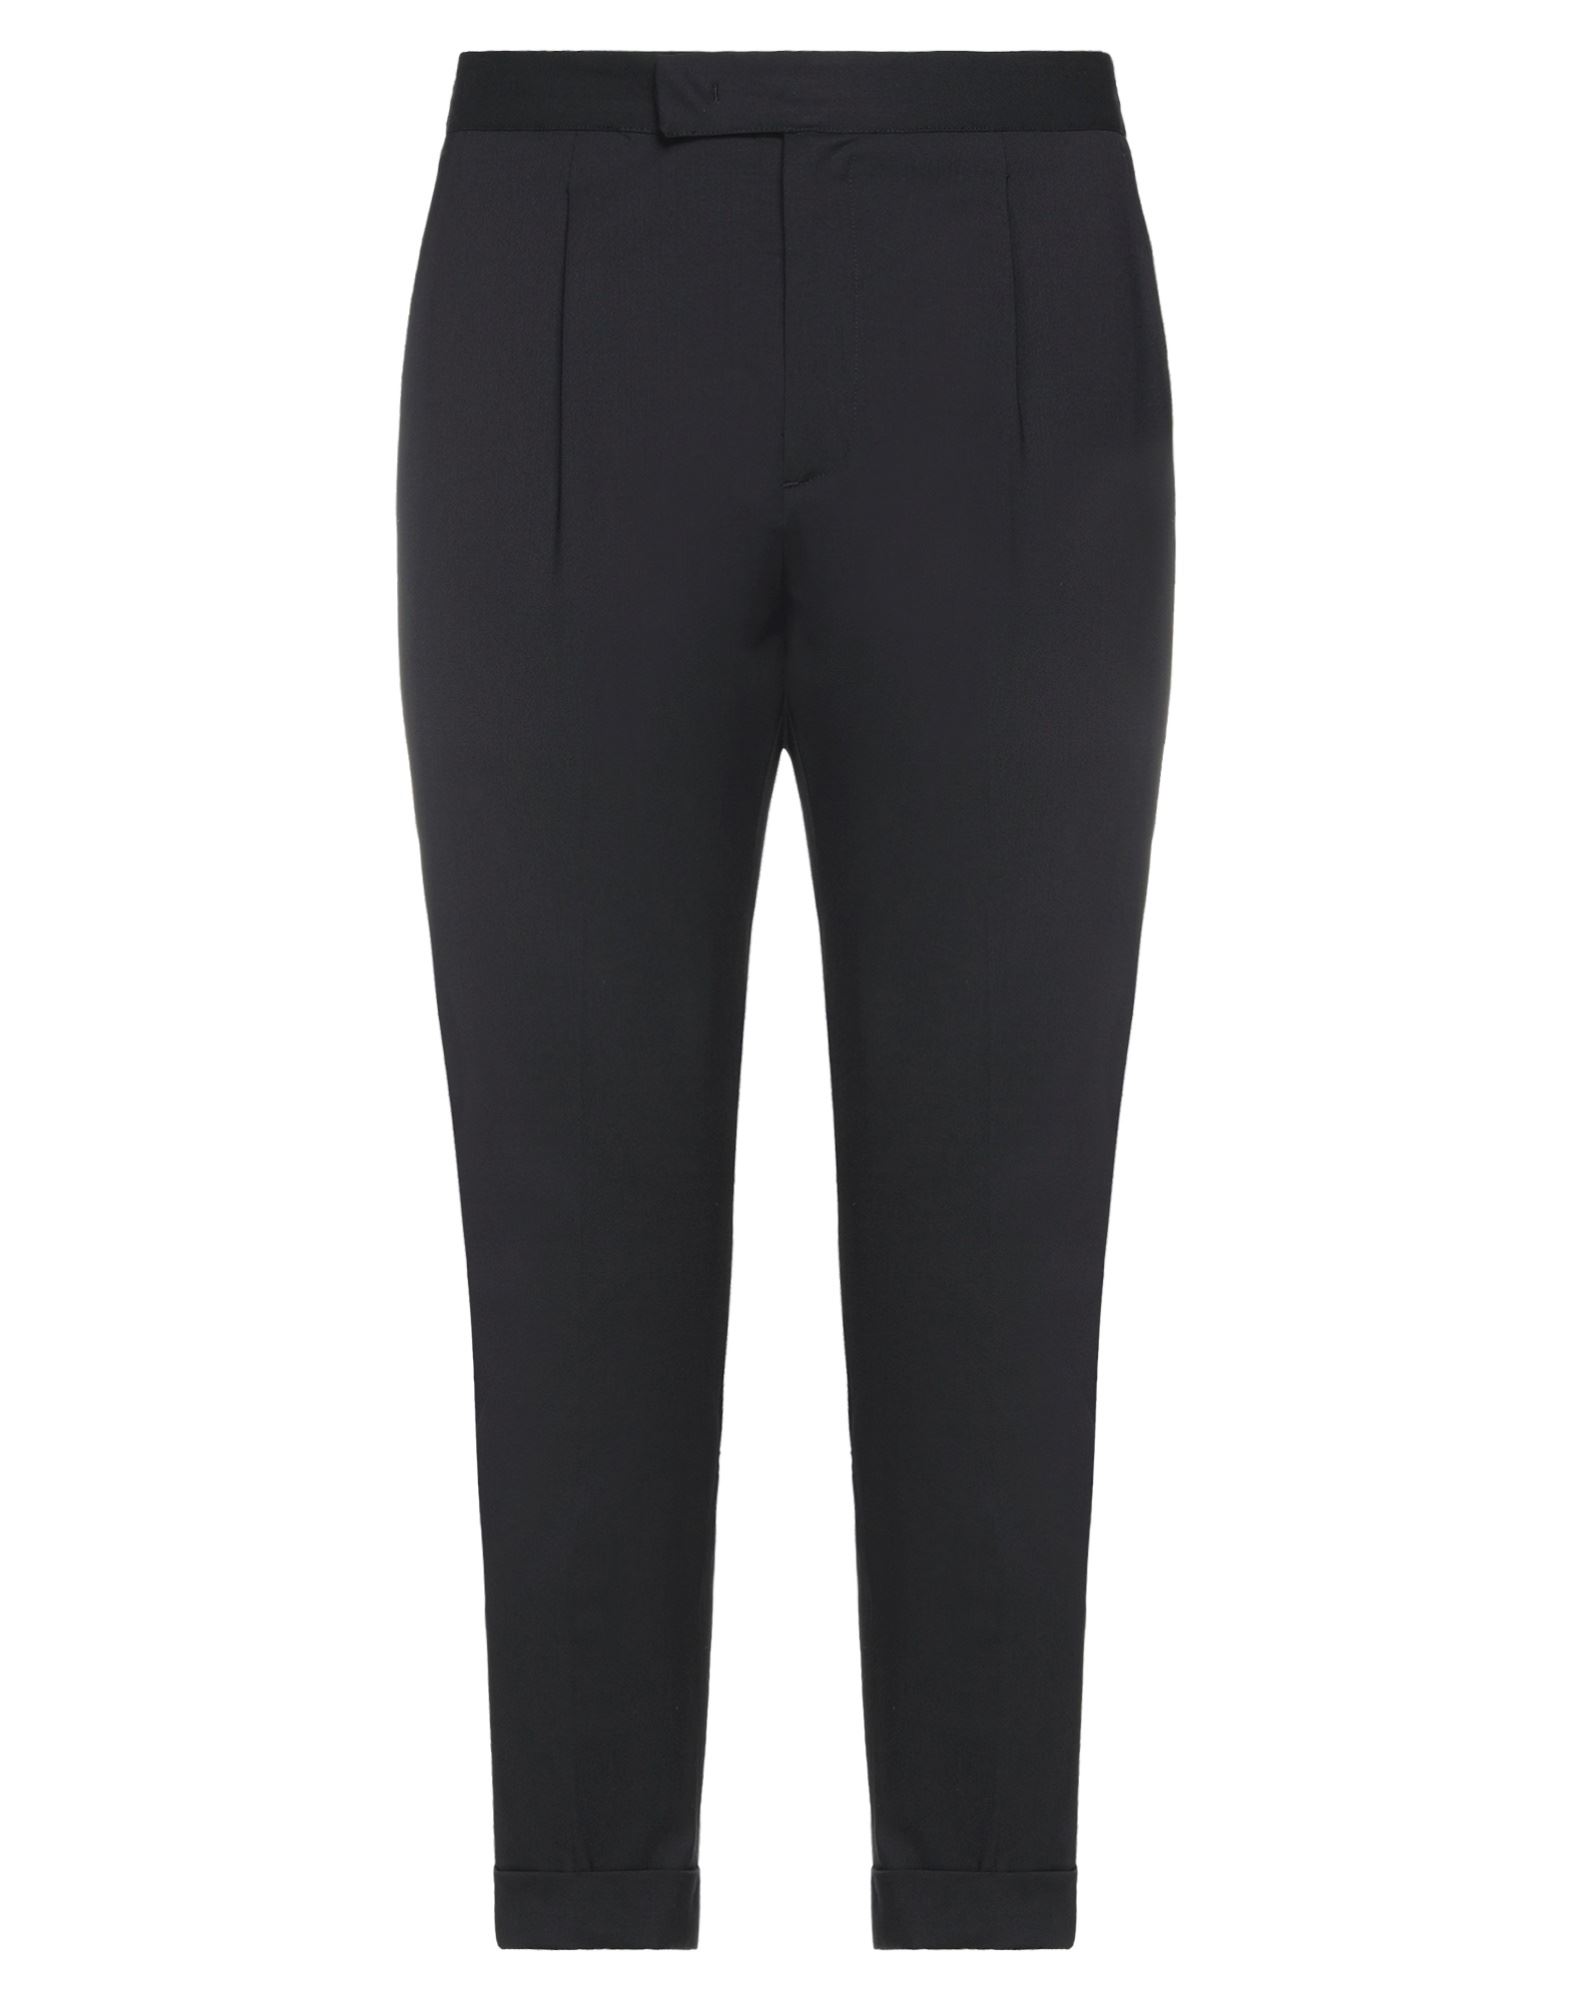 Low Brand Man Pants Black Size 36 Virgin Wool, Polyester, Lycra